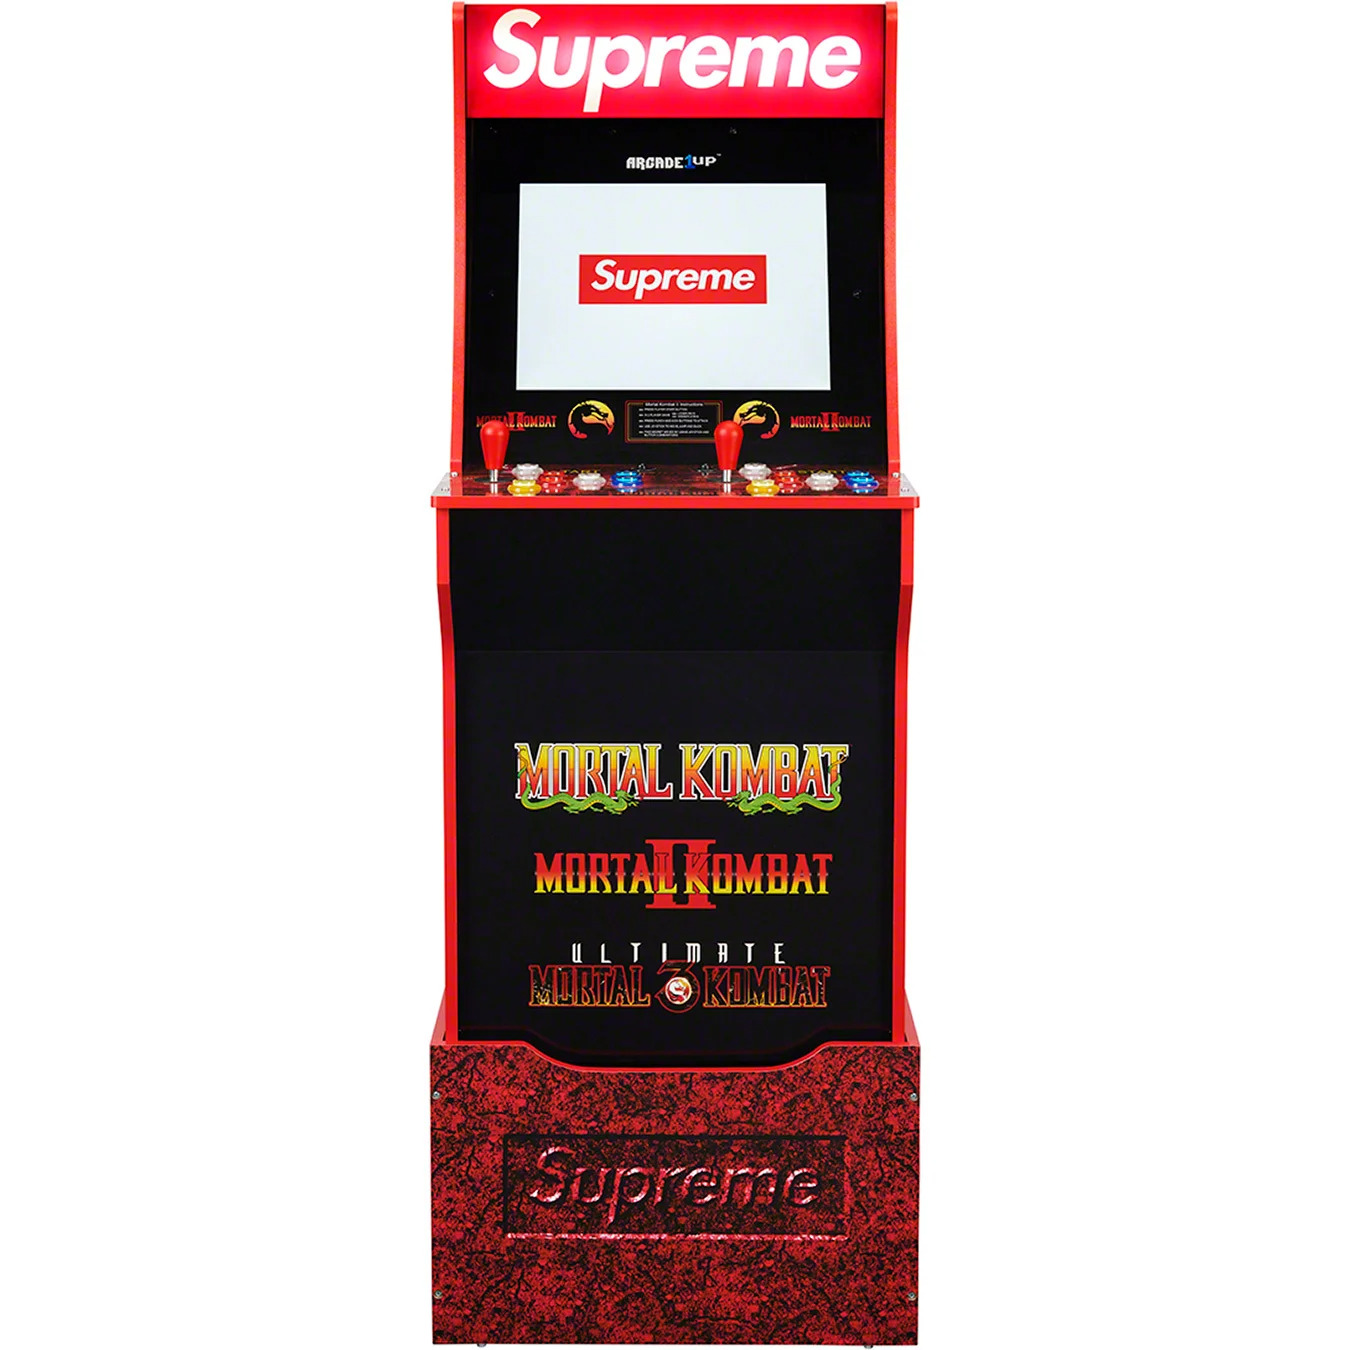 Supreme x ARCADE1UP Mortal Kombat Arcade Machine (Confirmed Order)